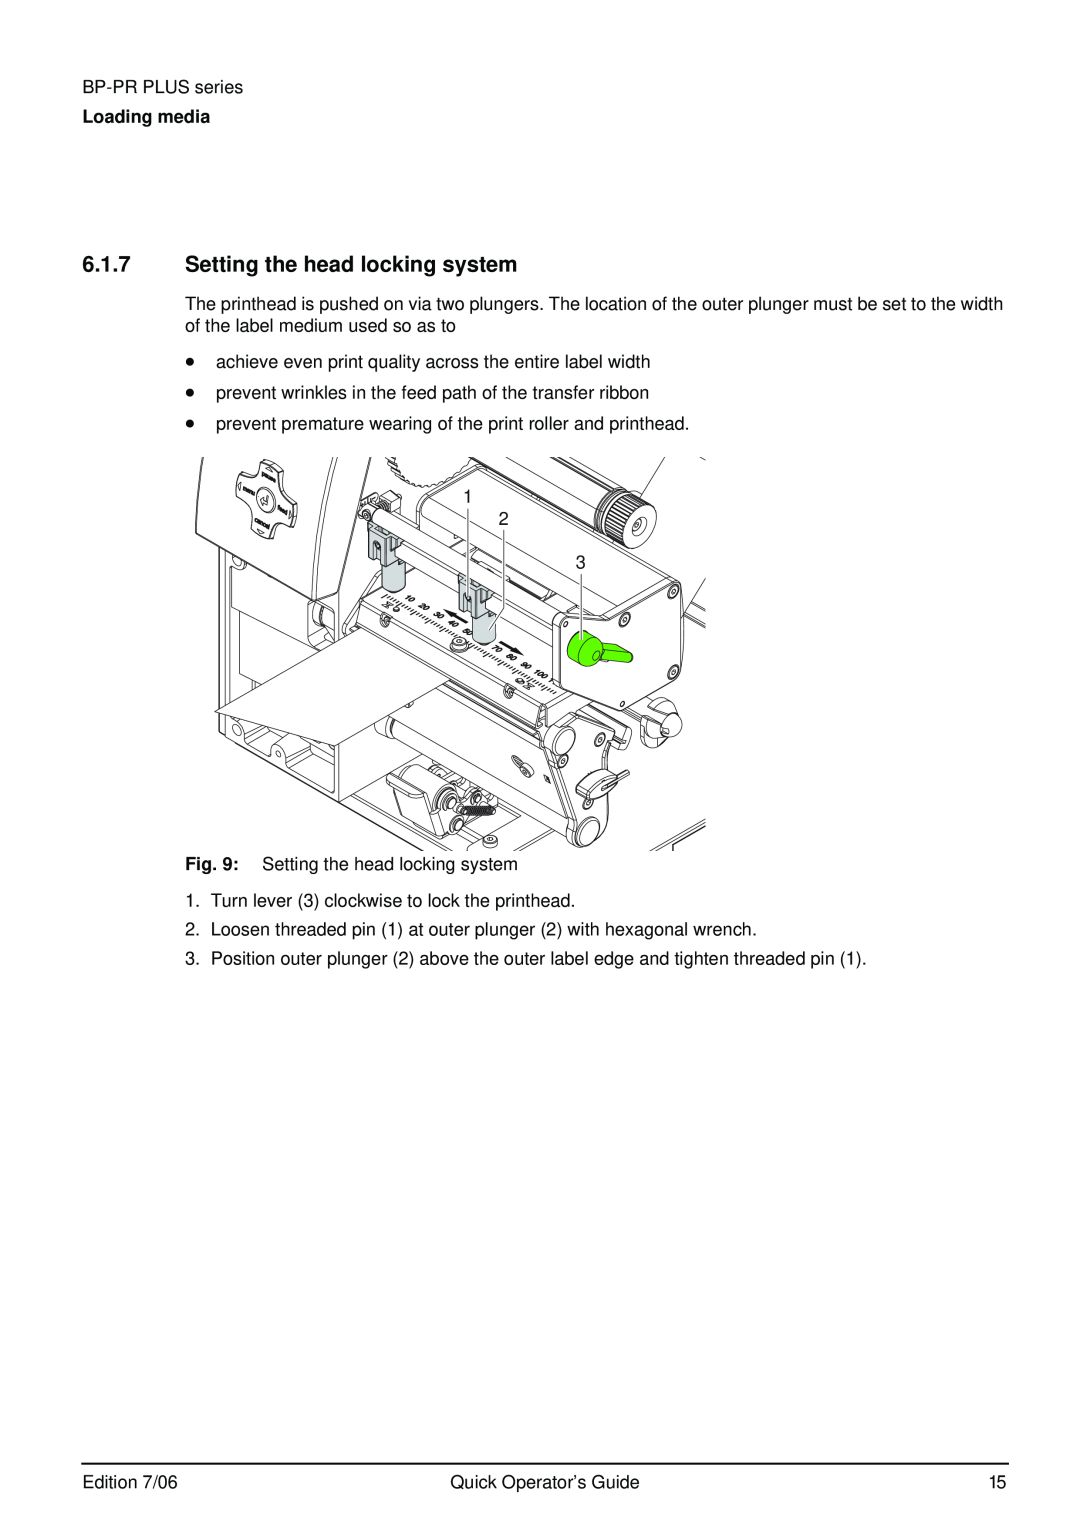 Brady BP-PR PLUS Series manual Setting the head locking system, Loading media 